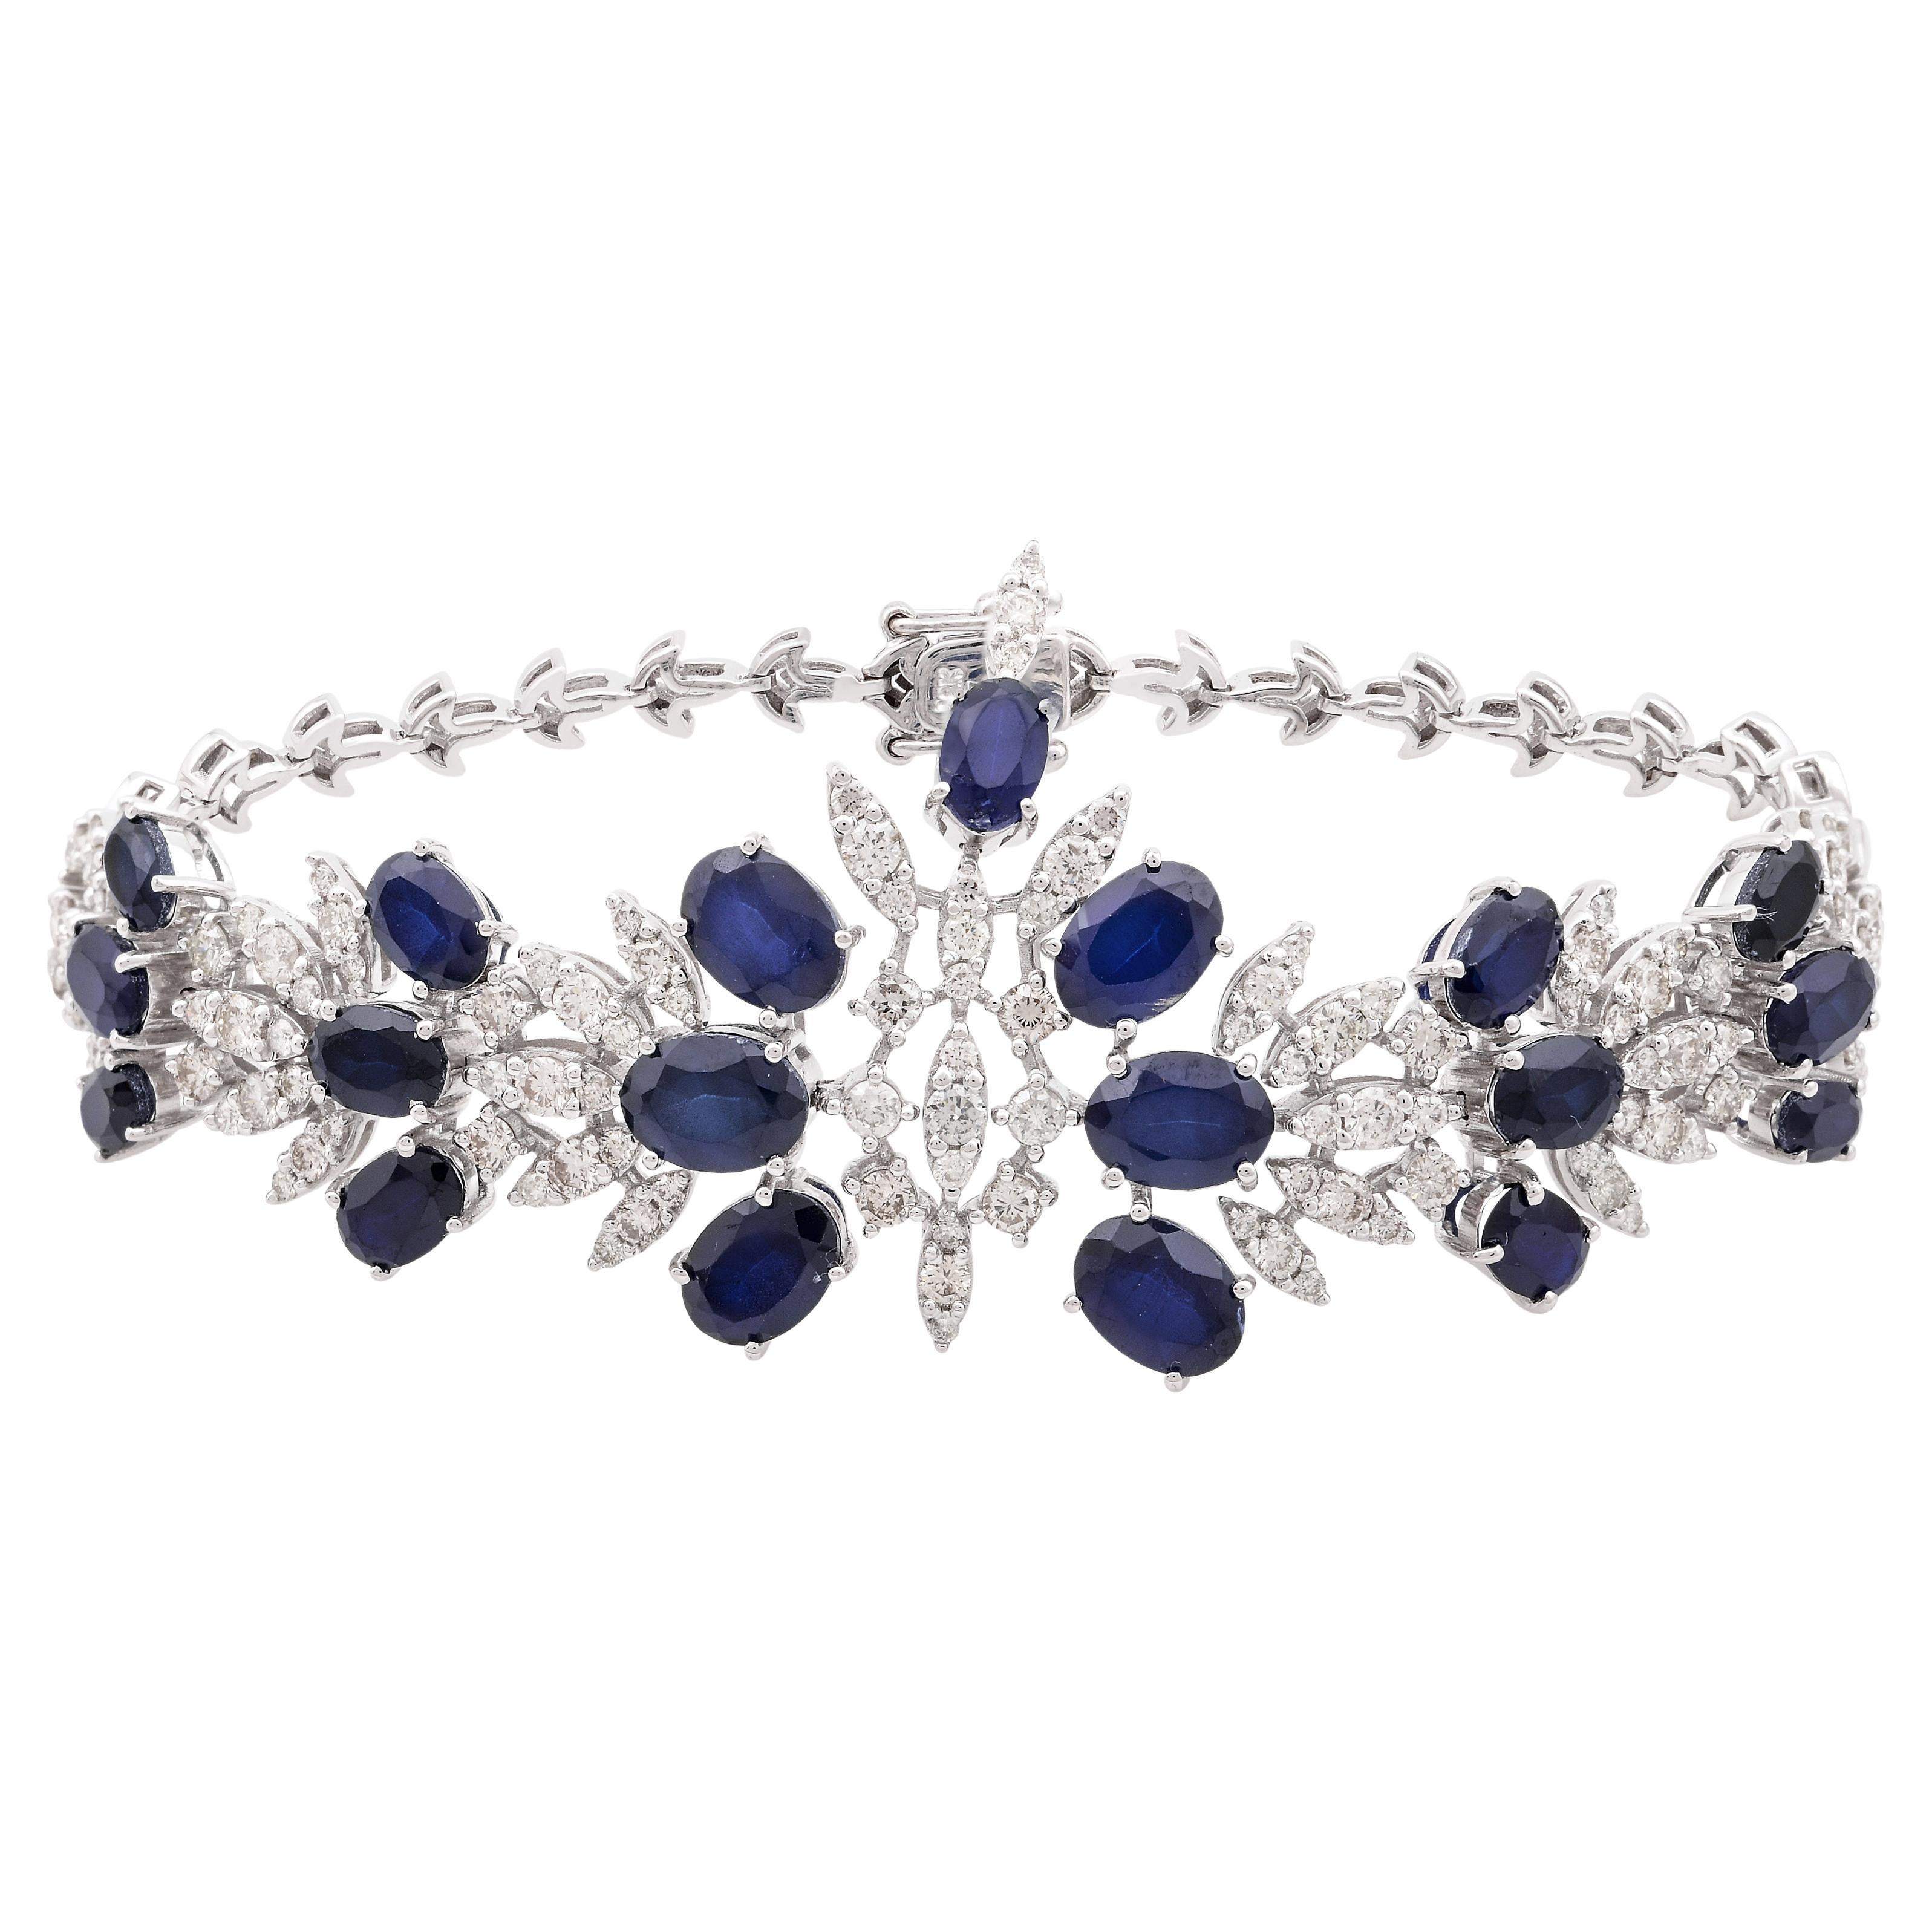 Blue Processed Gemstone Bracelet Natural Diamond Pave 18k White Gold Jewelry For Sale